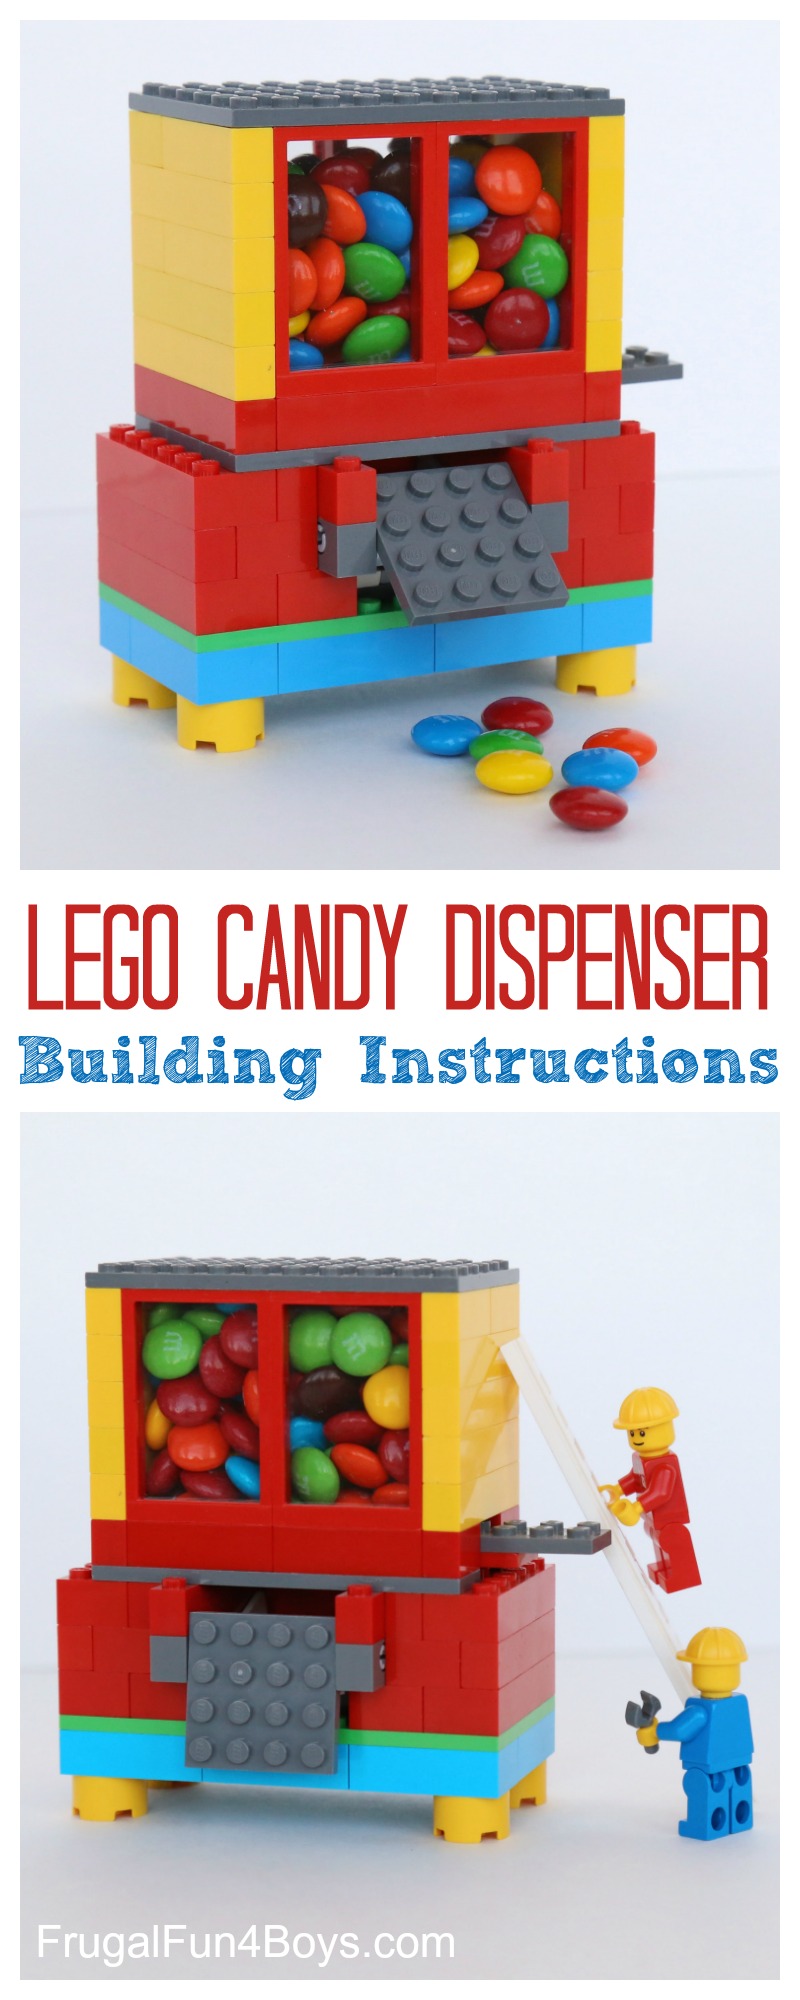 Build a Lego Candy Dispenser - Frugal Fun For Boys Girls